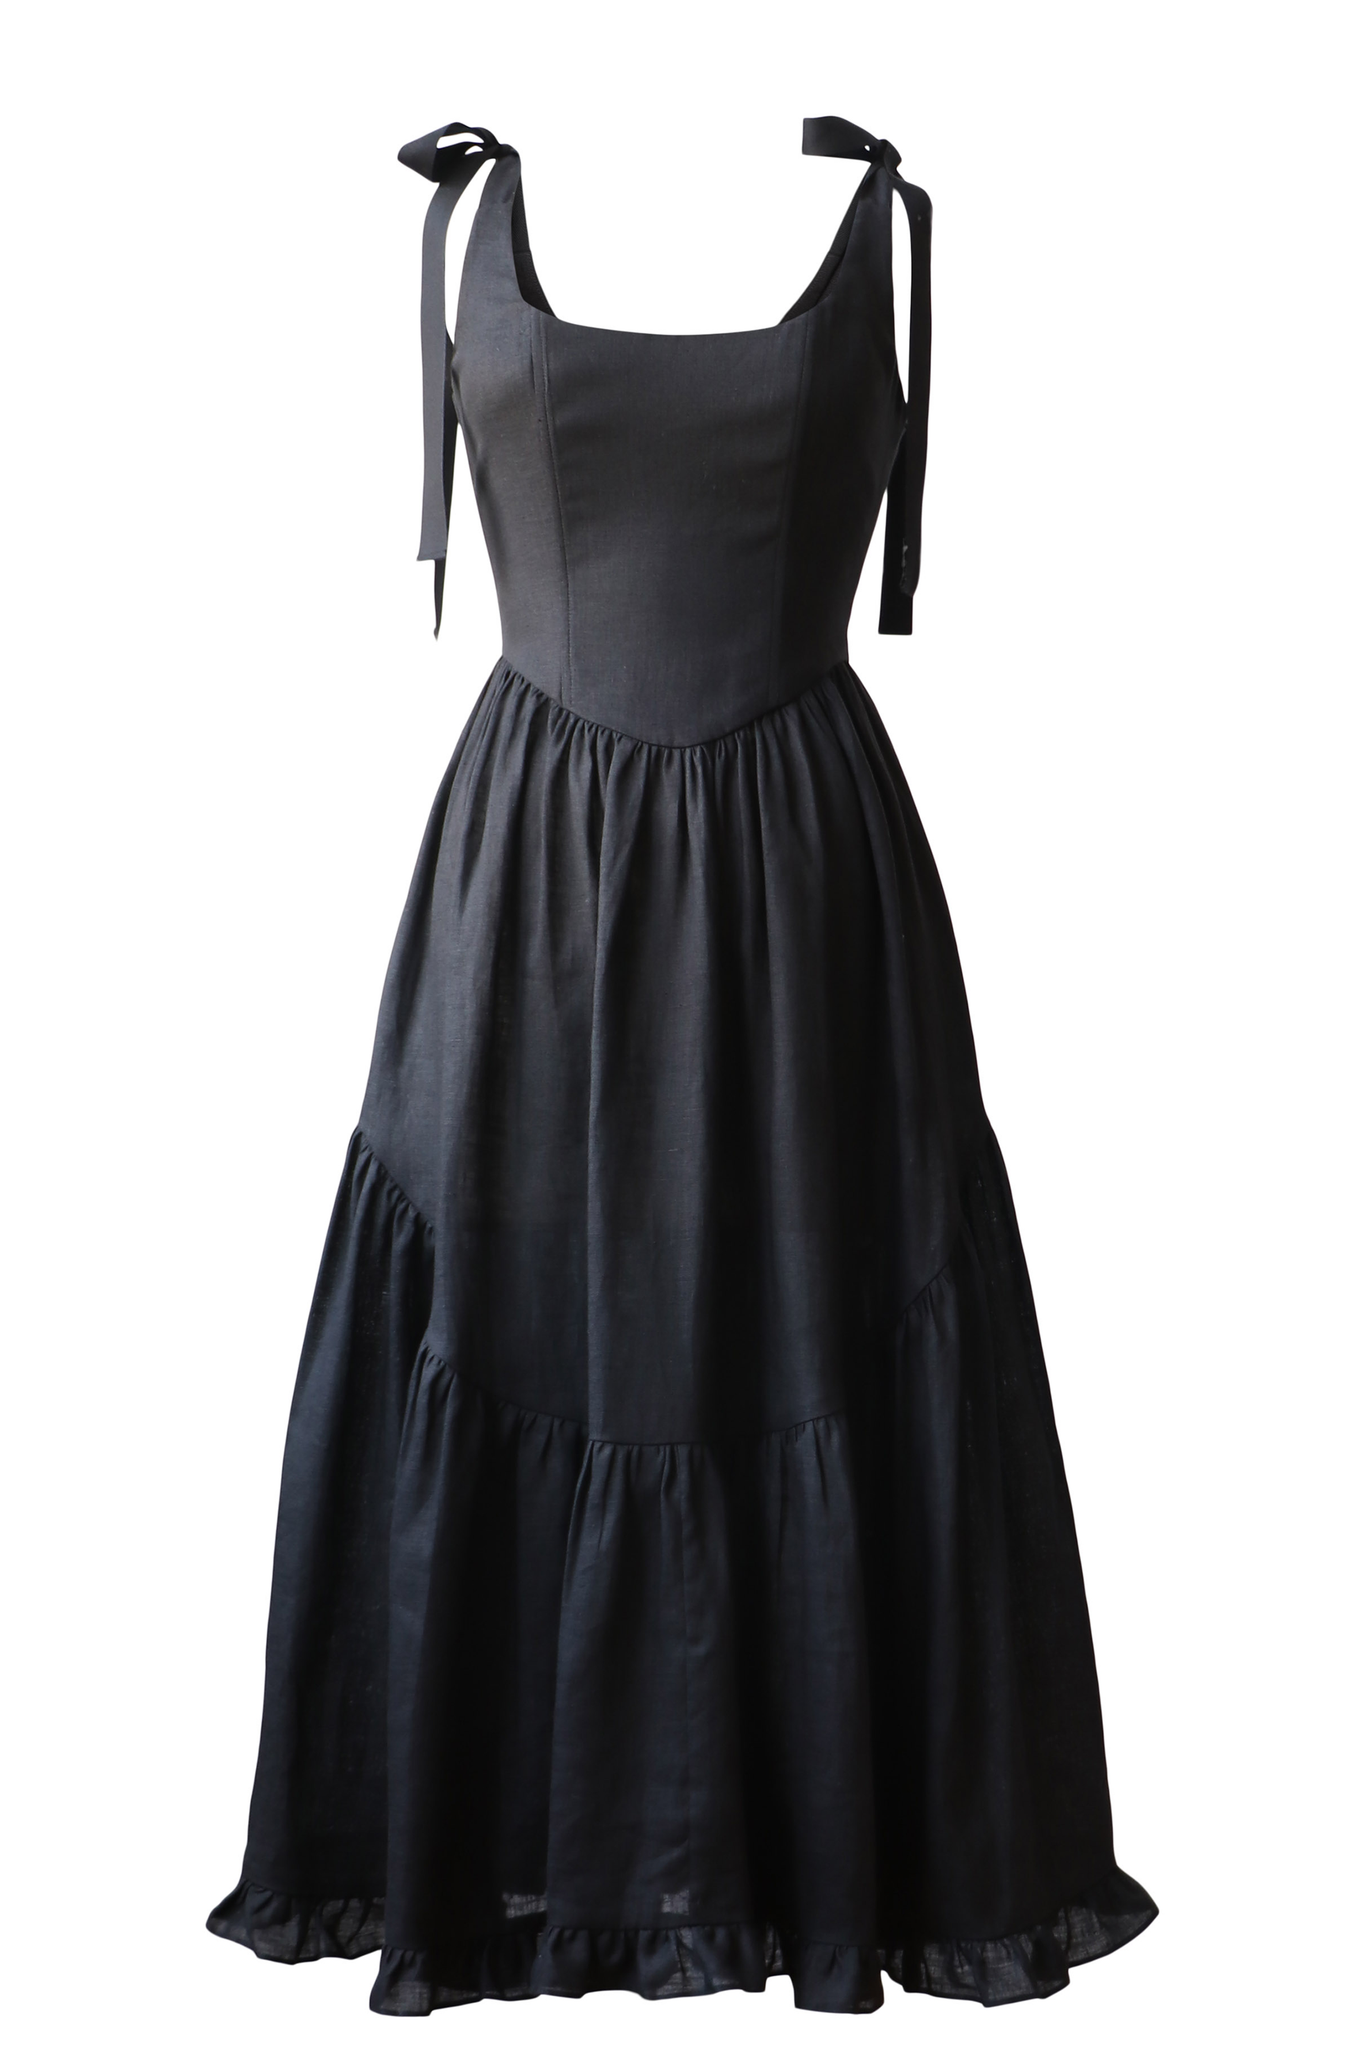 Mirabelle Dress in Black Linen – Of Her Own Kind